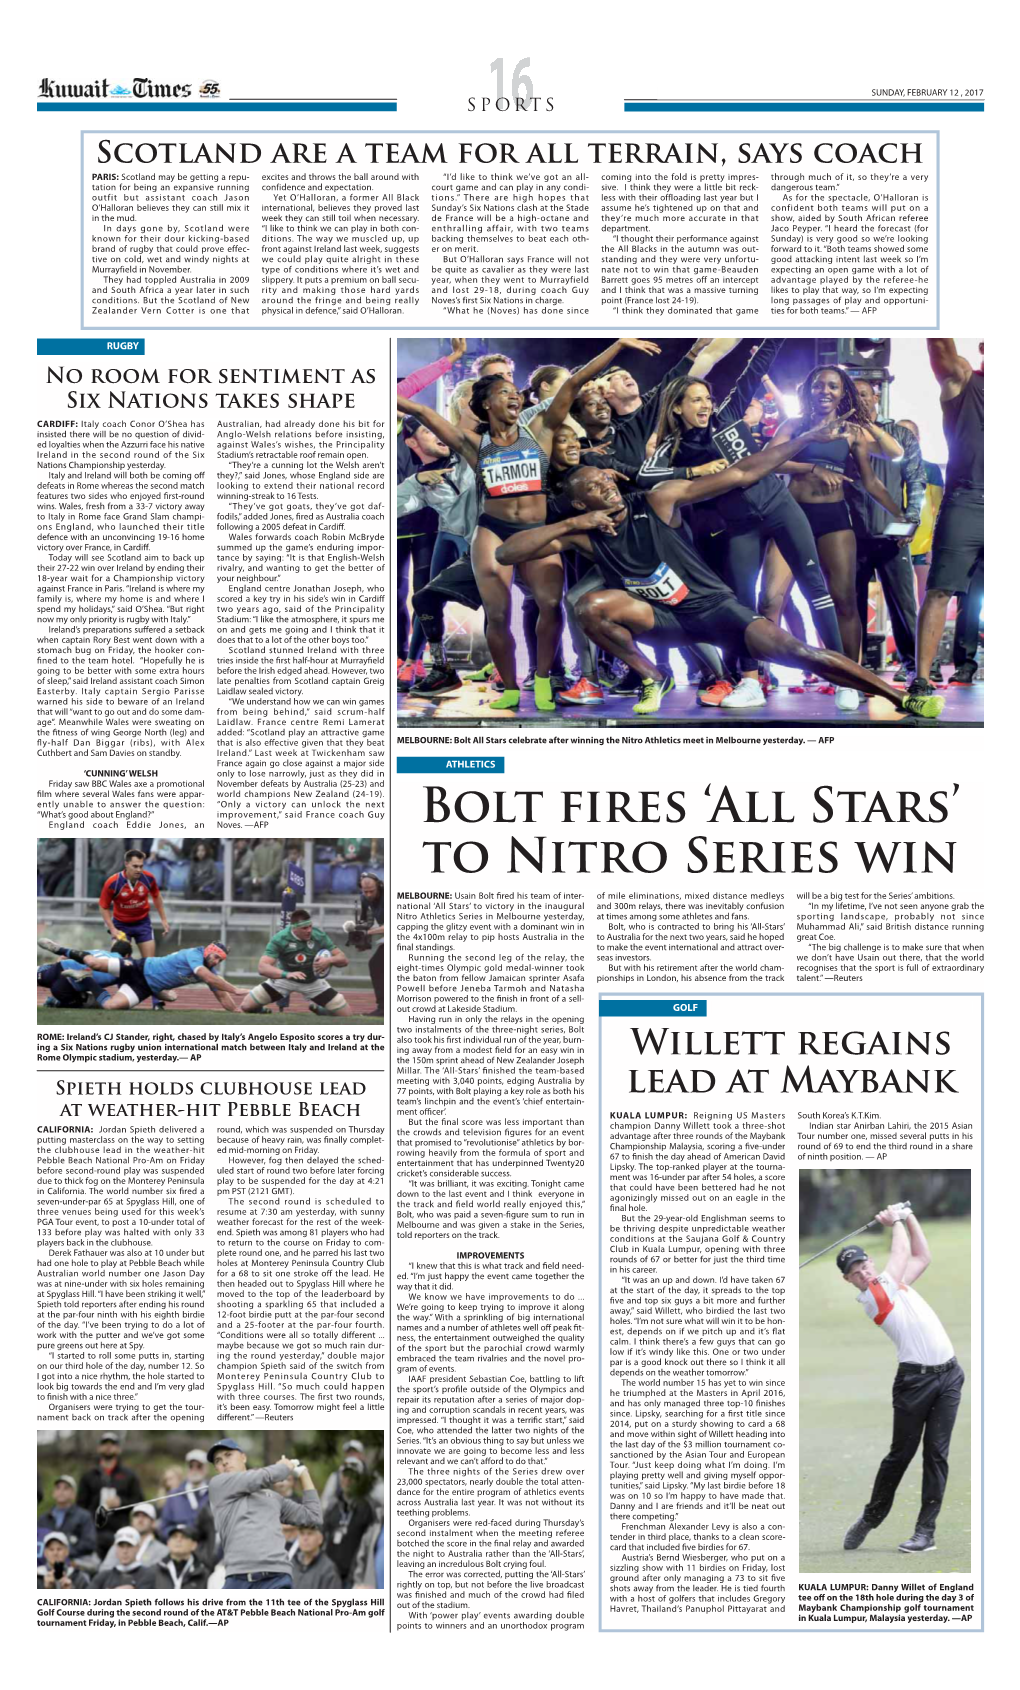 Bolt Fires ‘All Stars’ England Coach Eddie Jones, an Noves